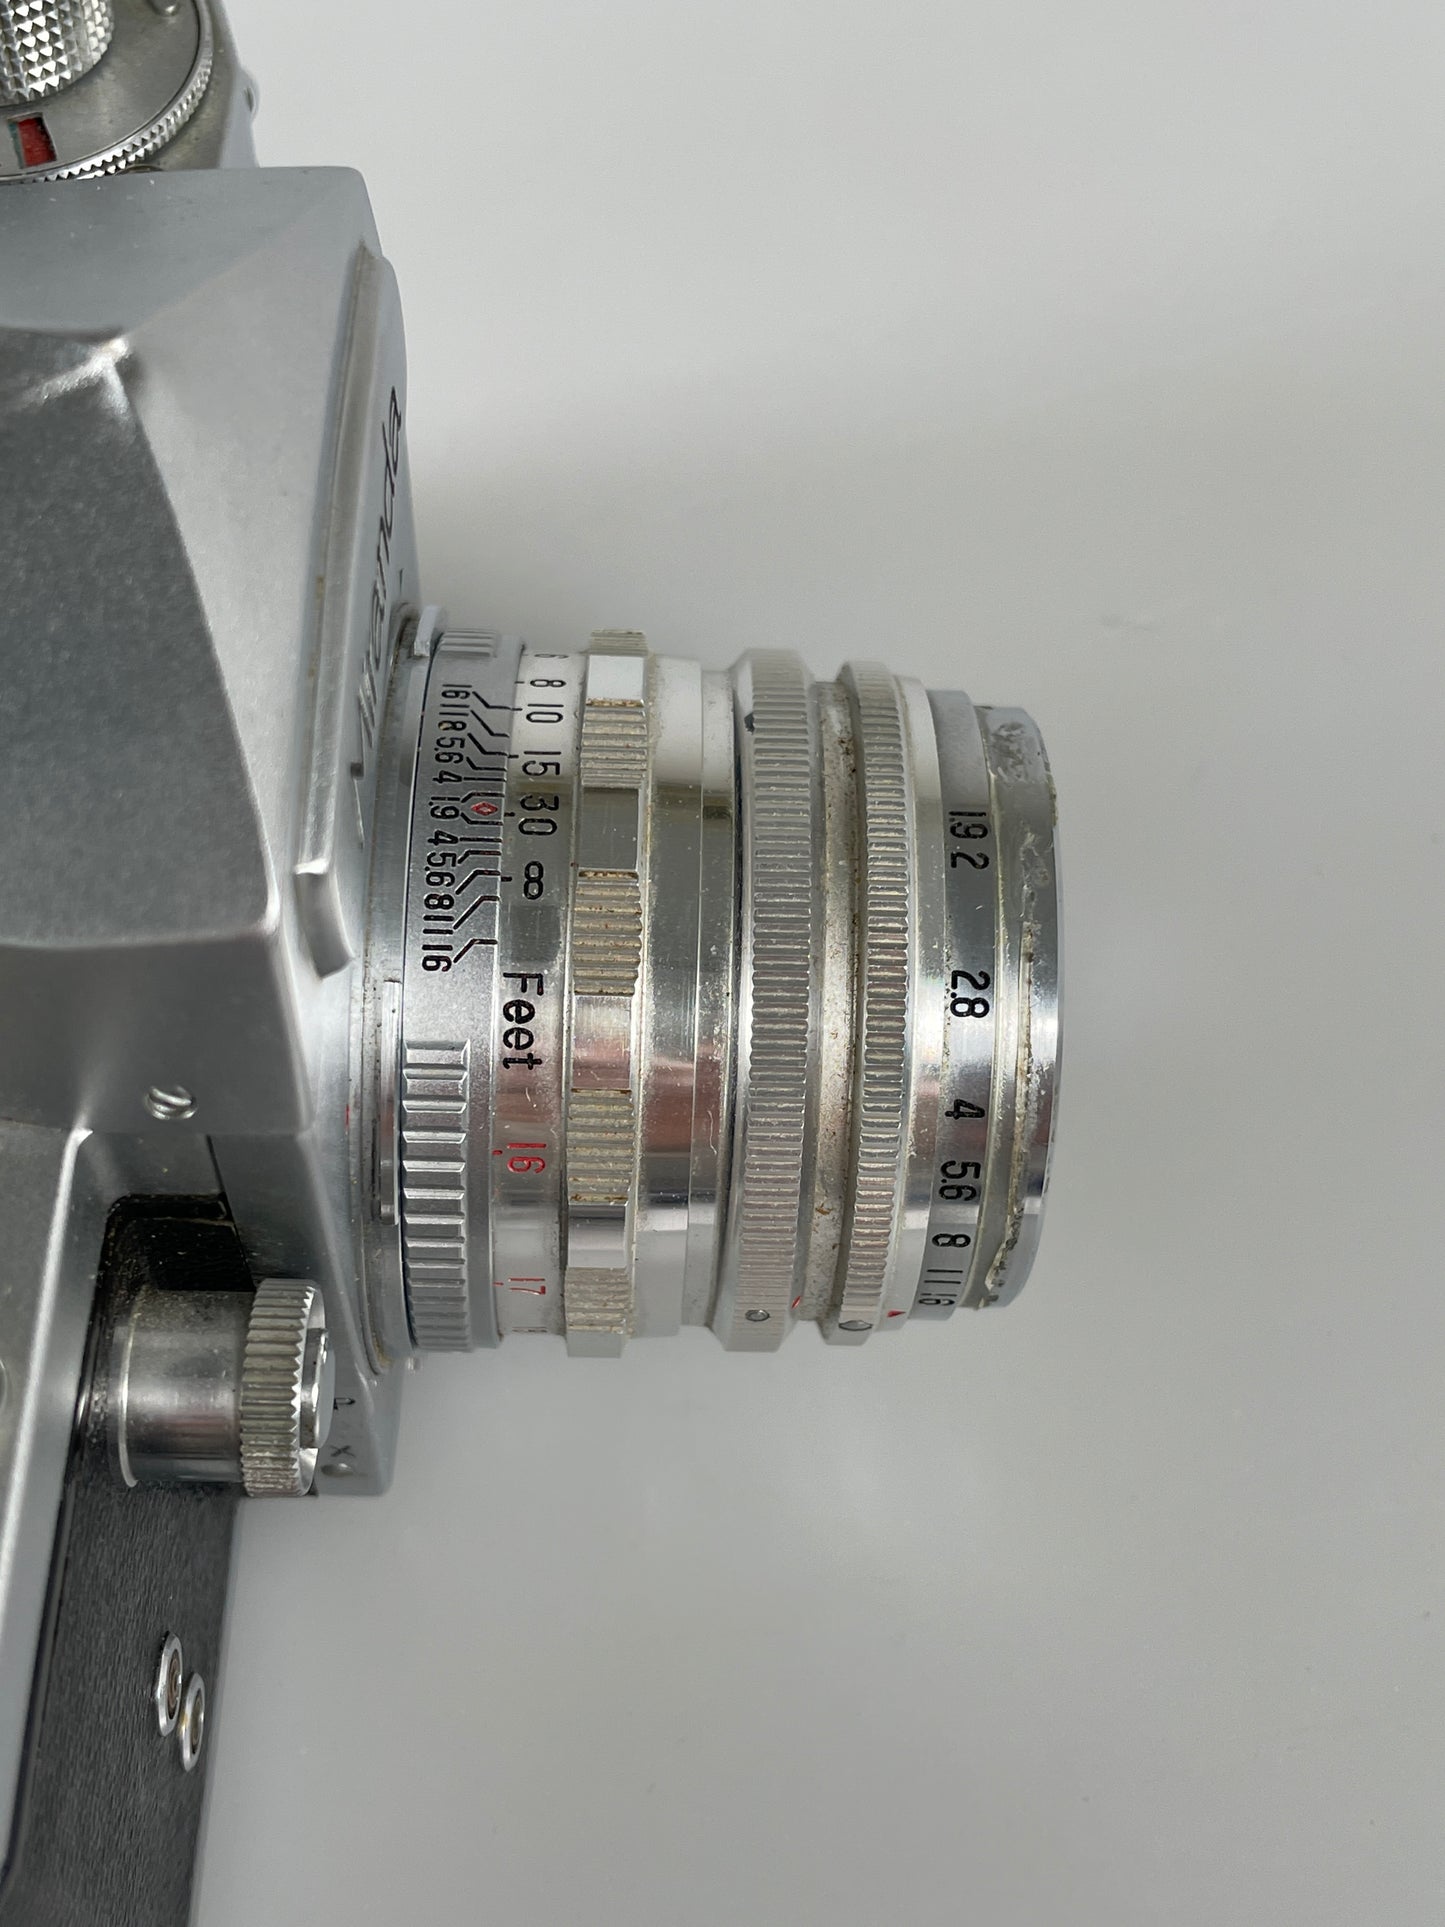 Miranda Orion Camera Co w/ Zunow 5cm f1.9 Miranda 44mm screw mount lens